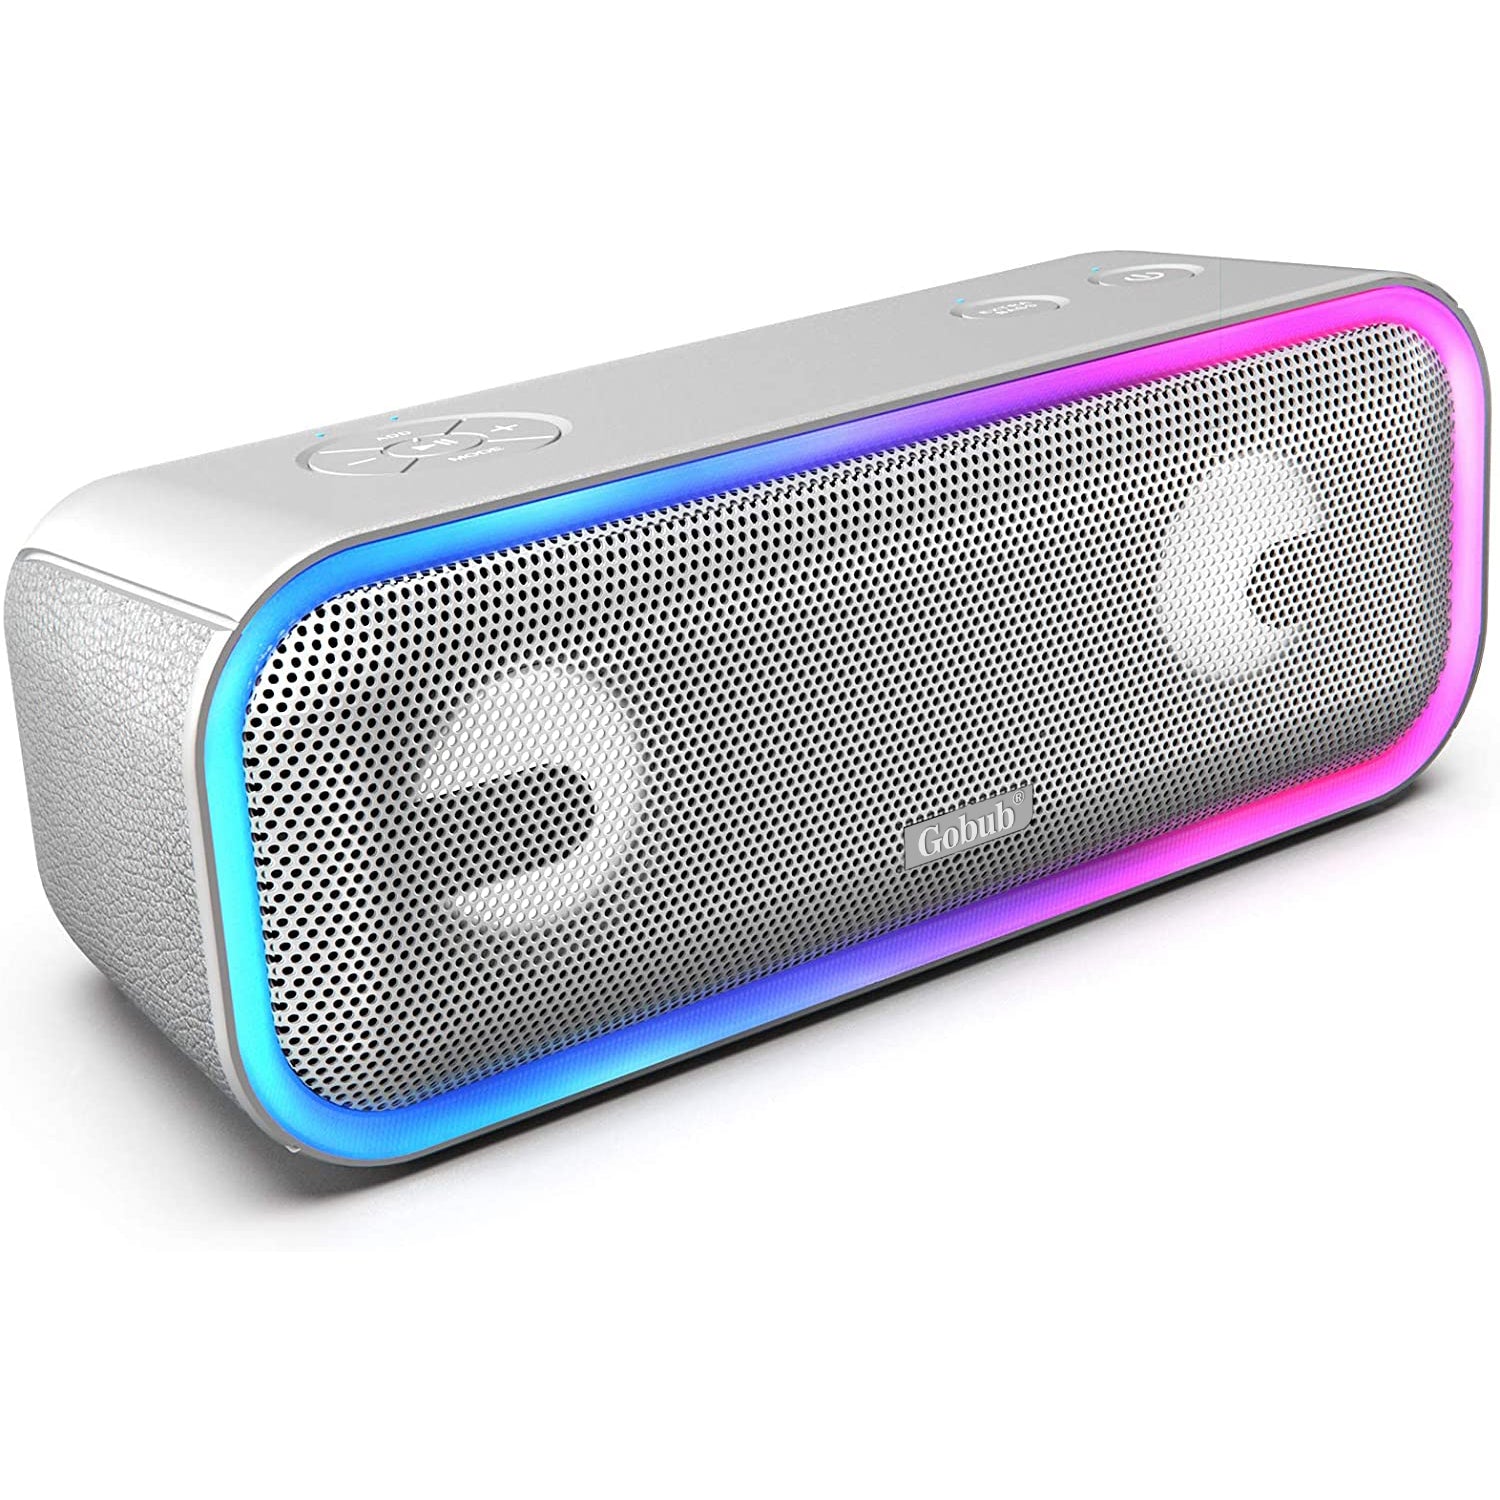 GOBUB SoundBox Pro+ Wireless Bluetooth Speaker